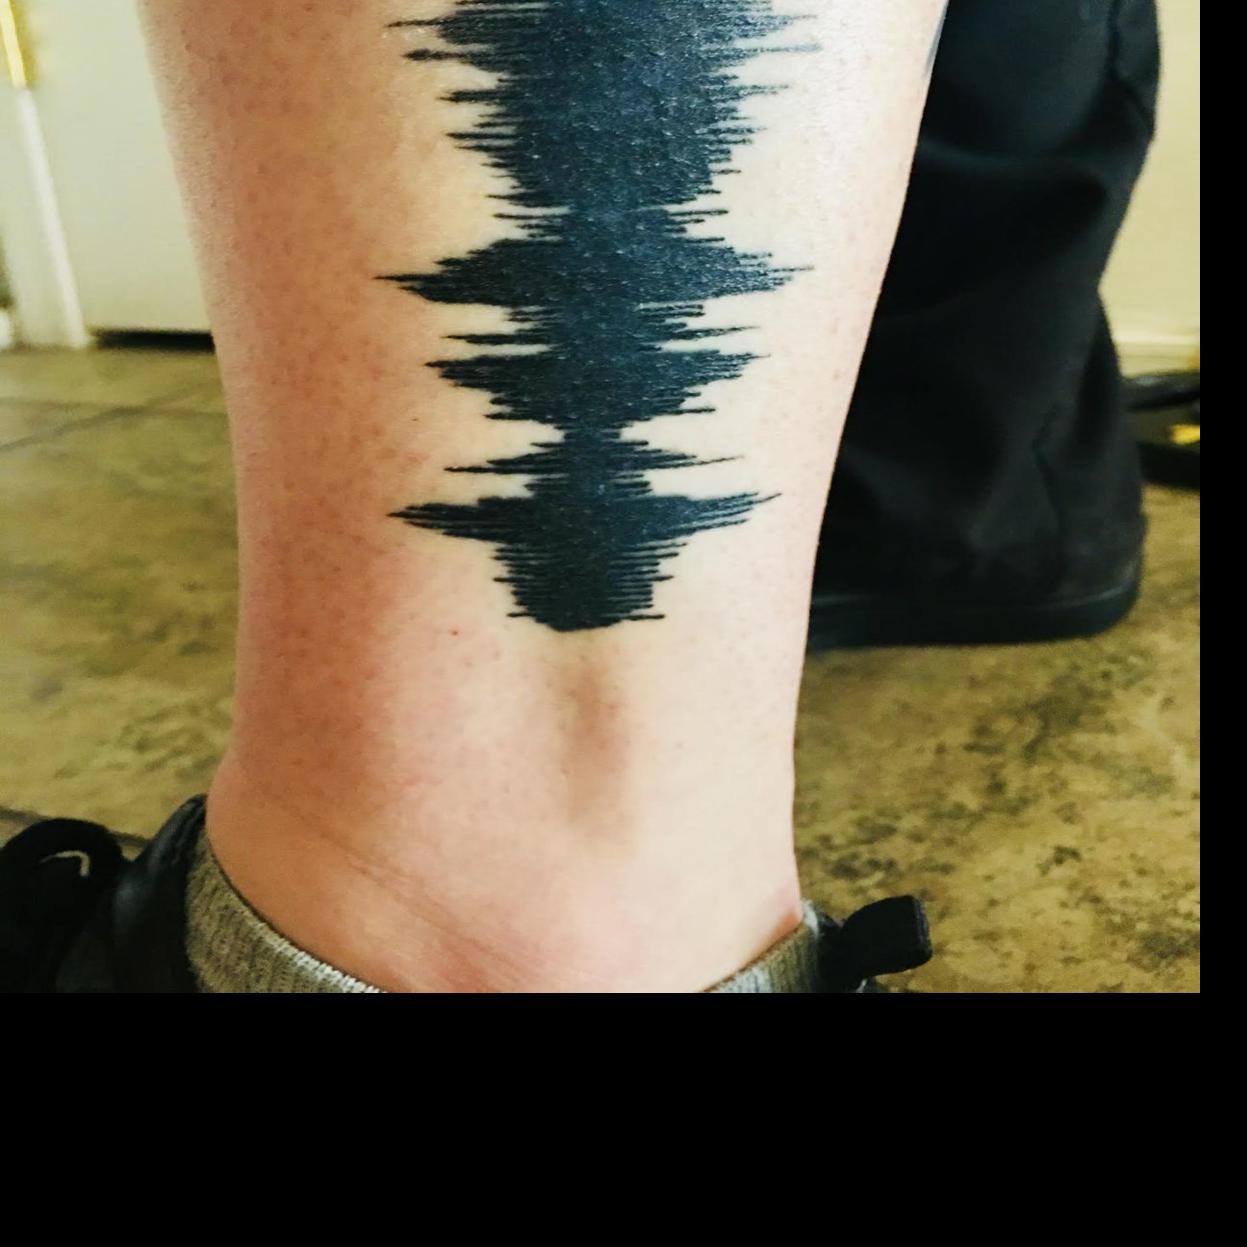 sound wave tattoo